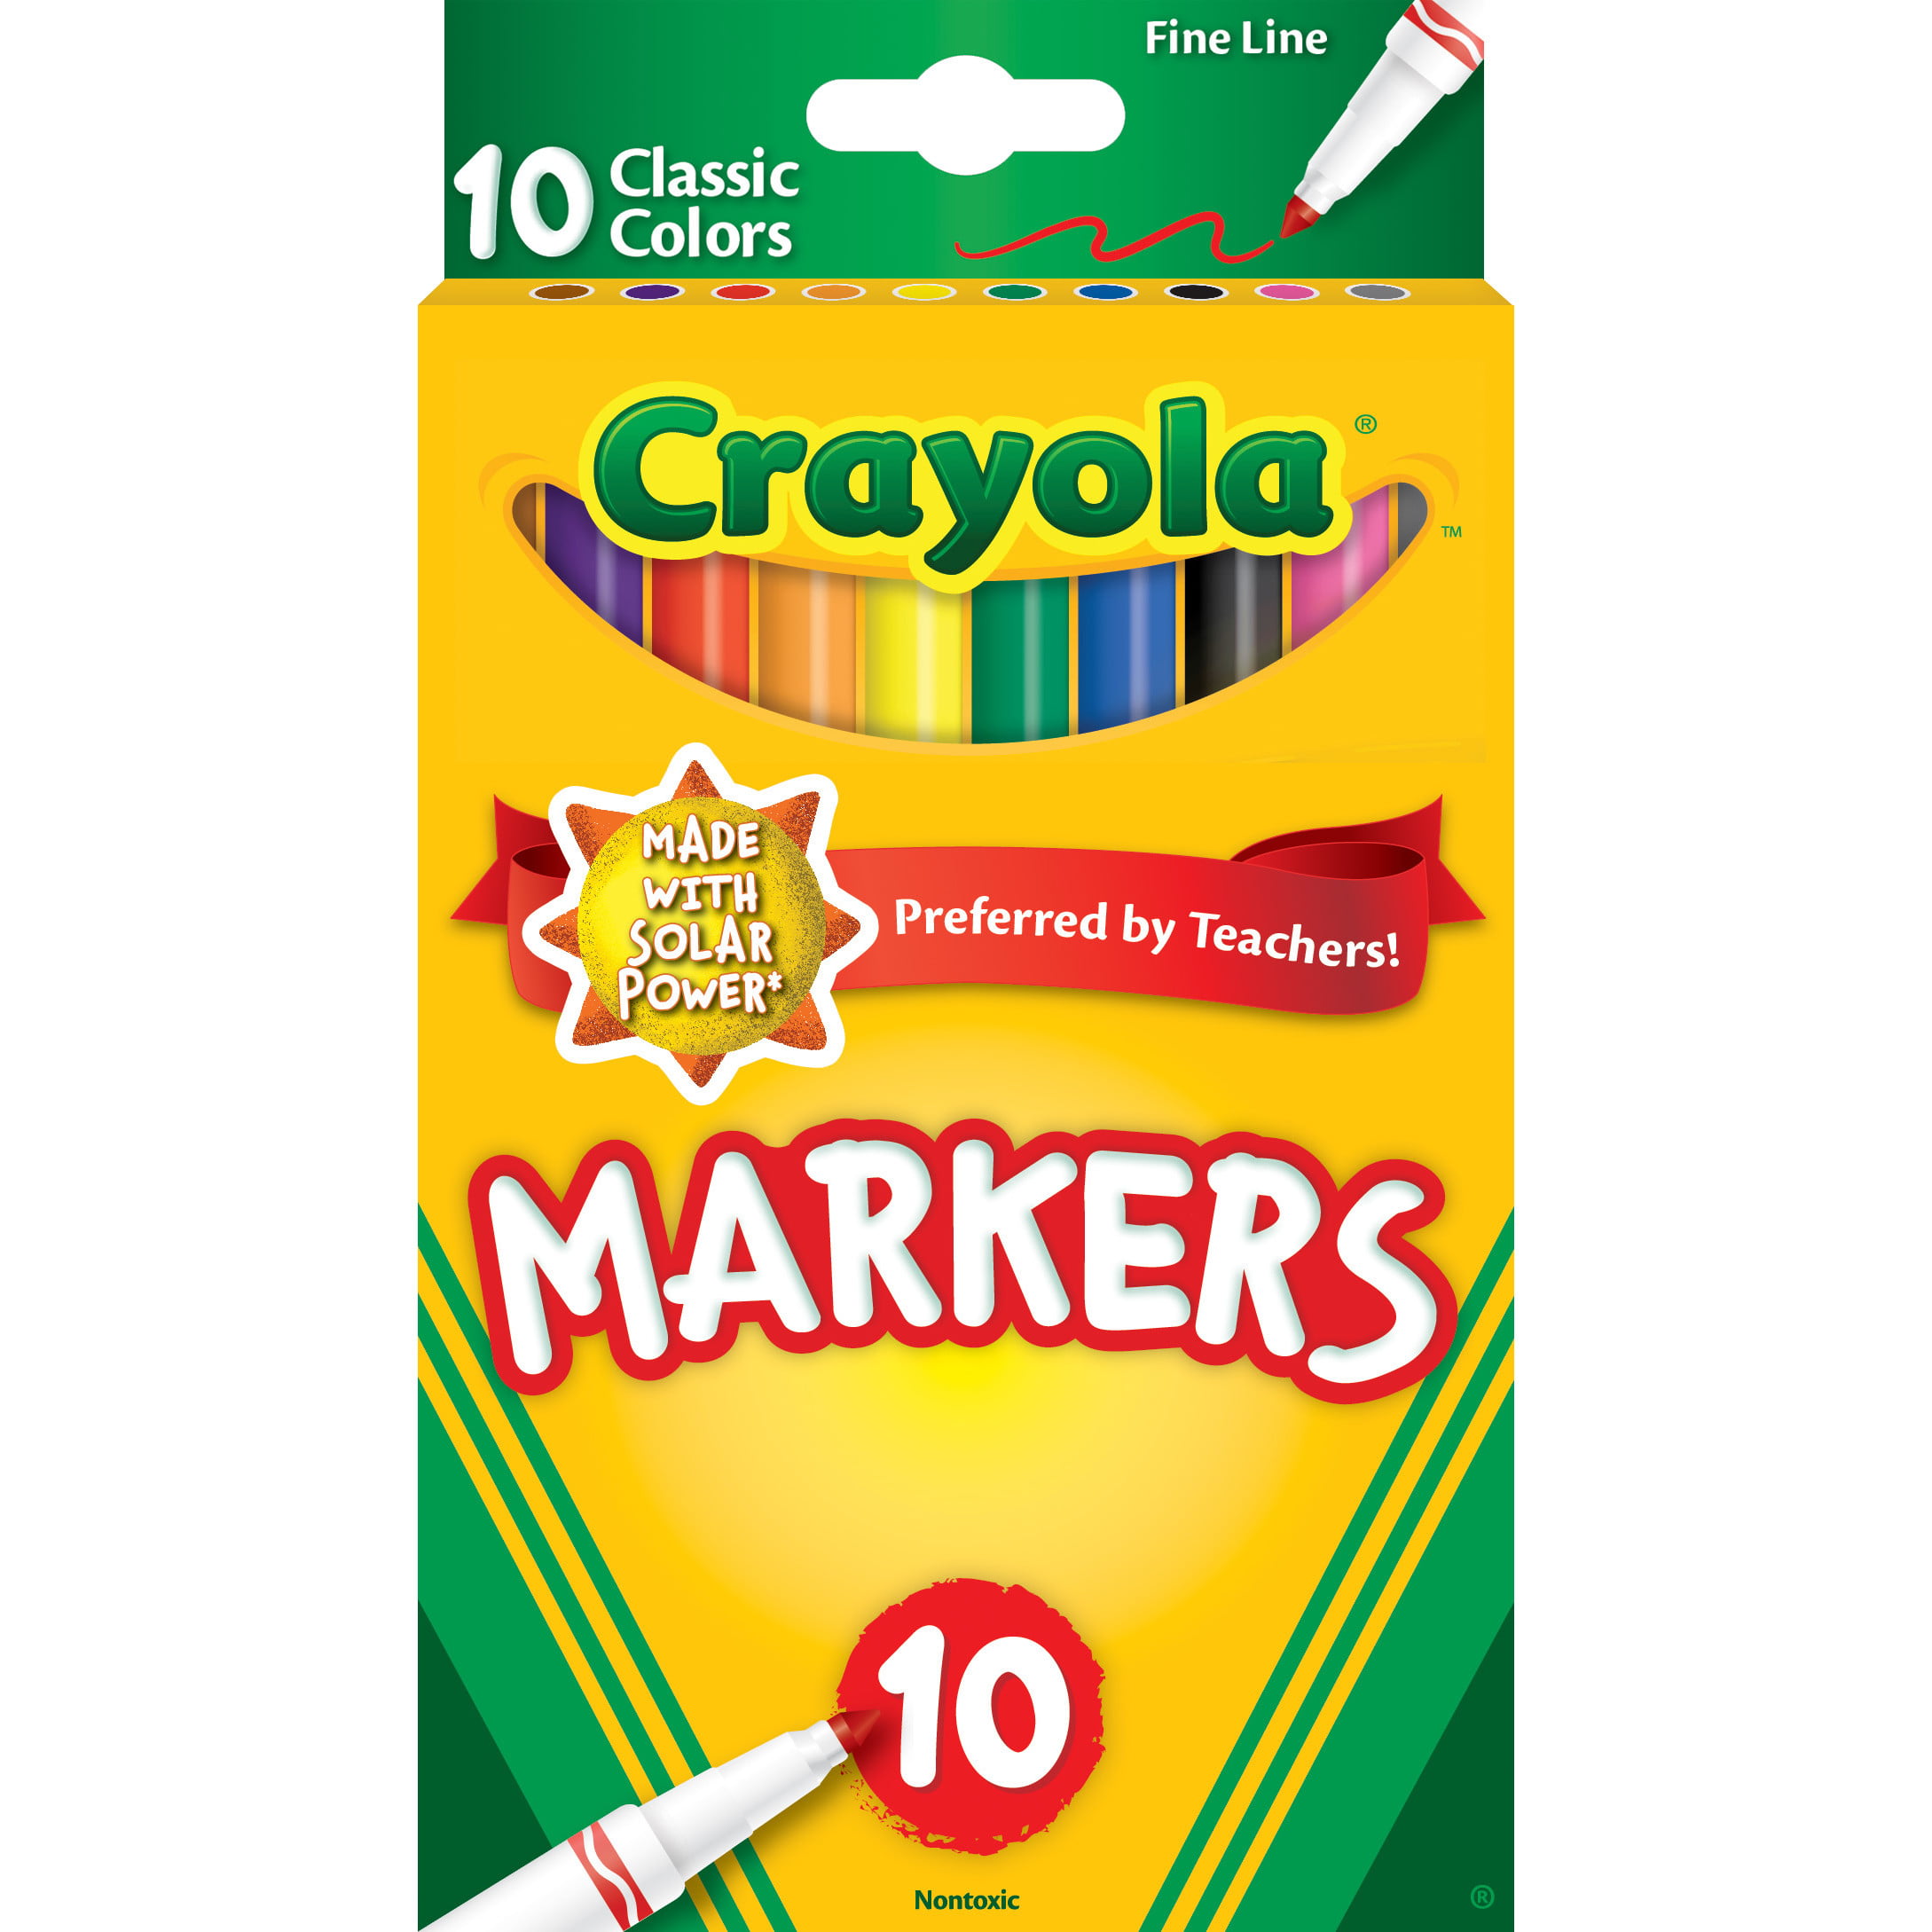 Crayola Super Tips Marker Set, 100 Washable Markers, Assorted Colors, Gift  for Kids